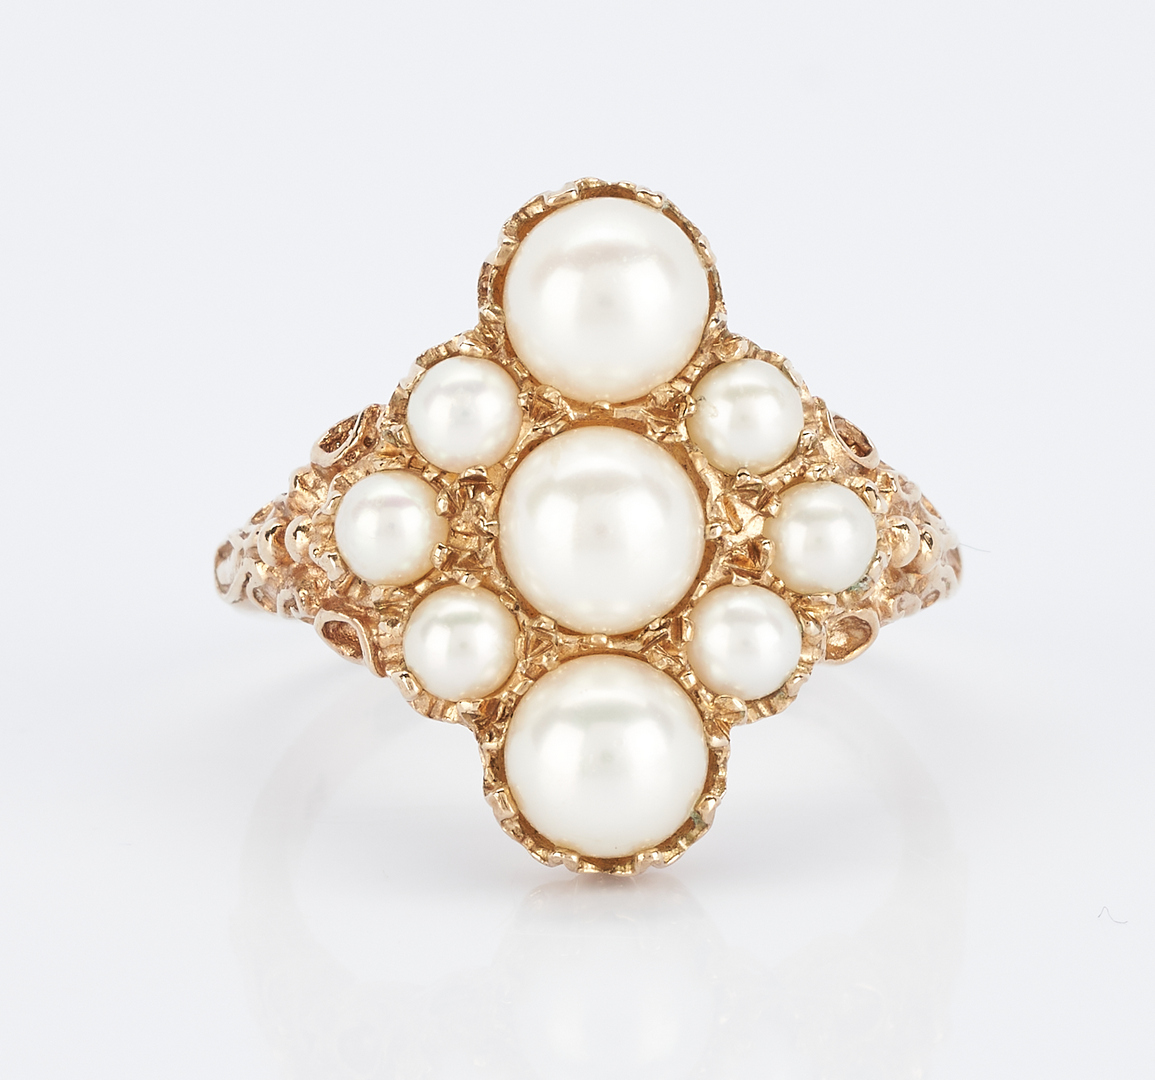 Lot 931: Double Strand Pearl Bracelet & Pearl Ring